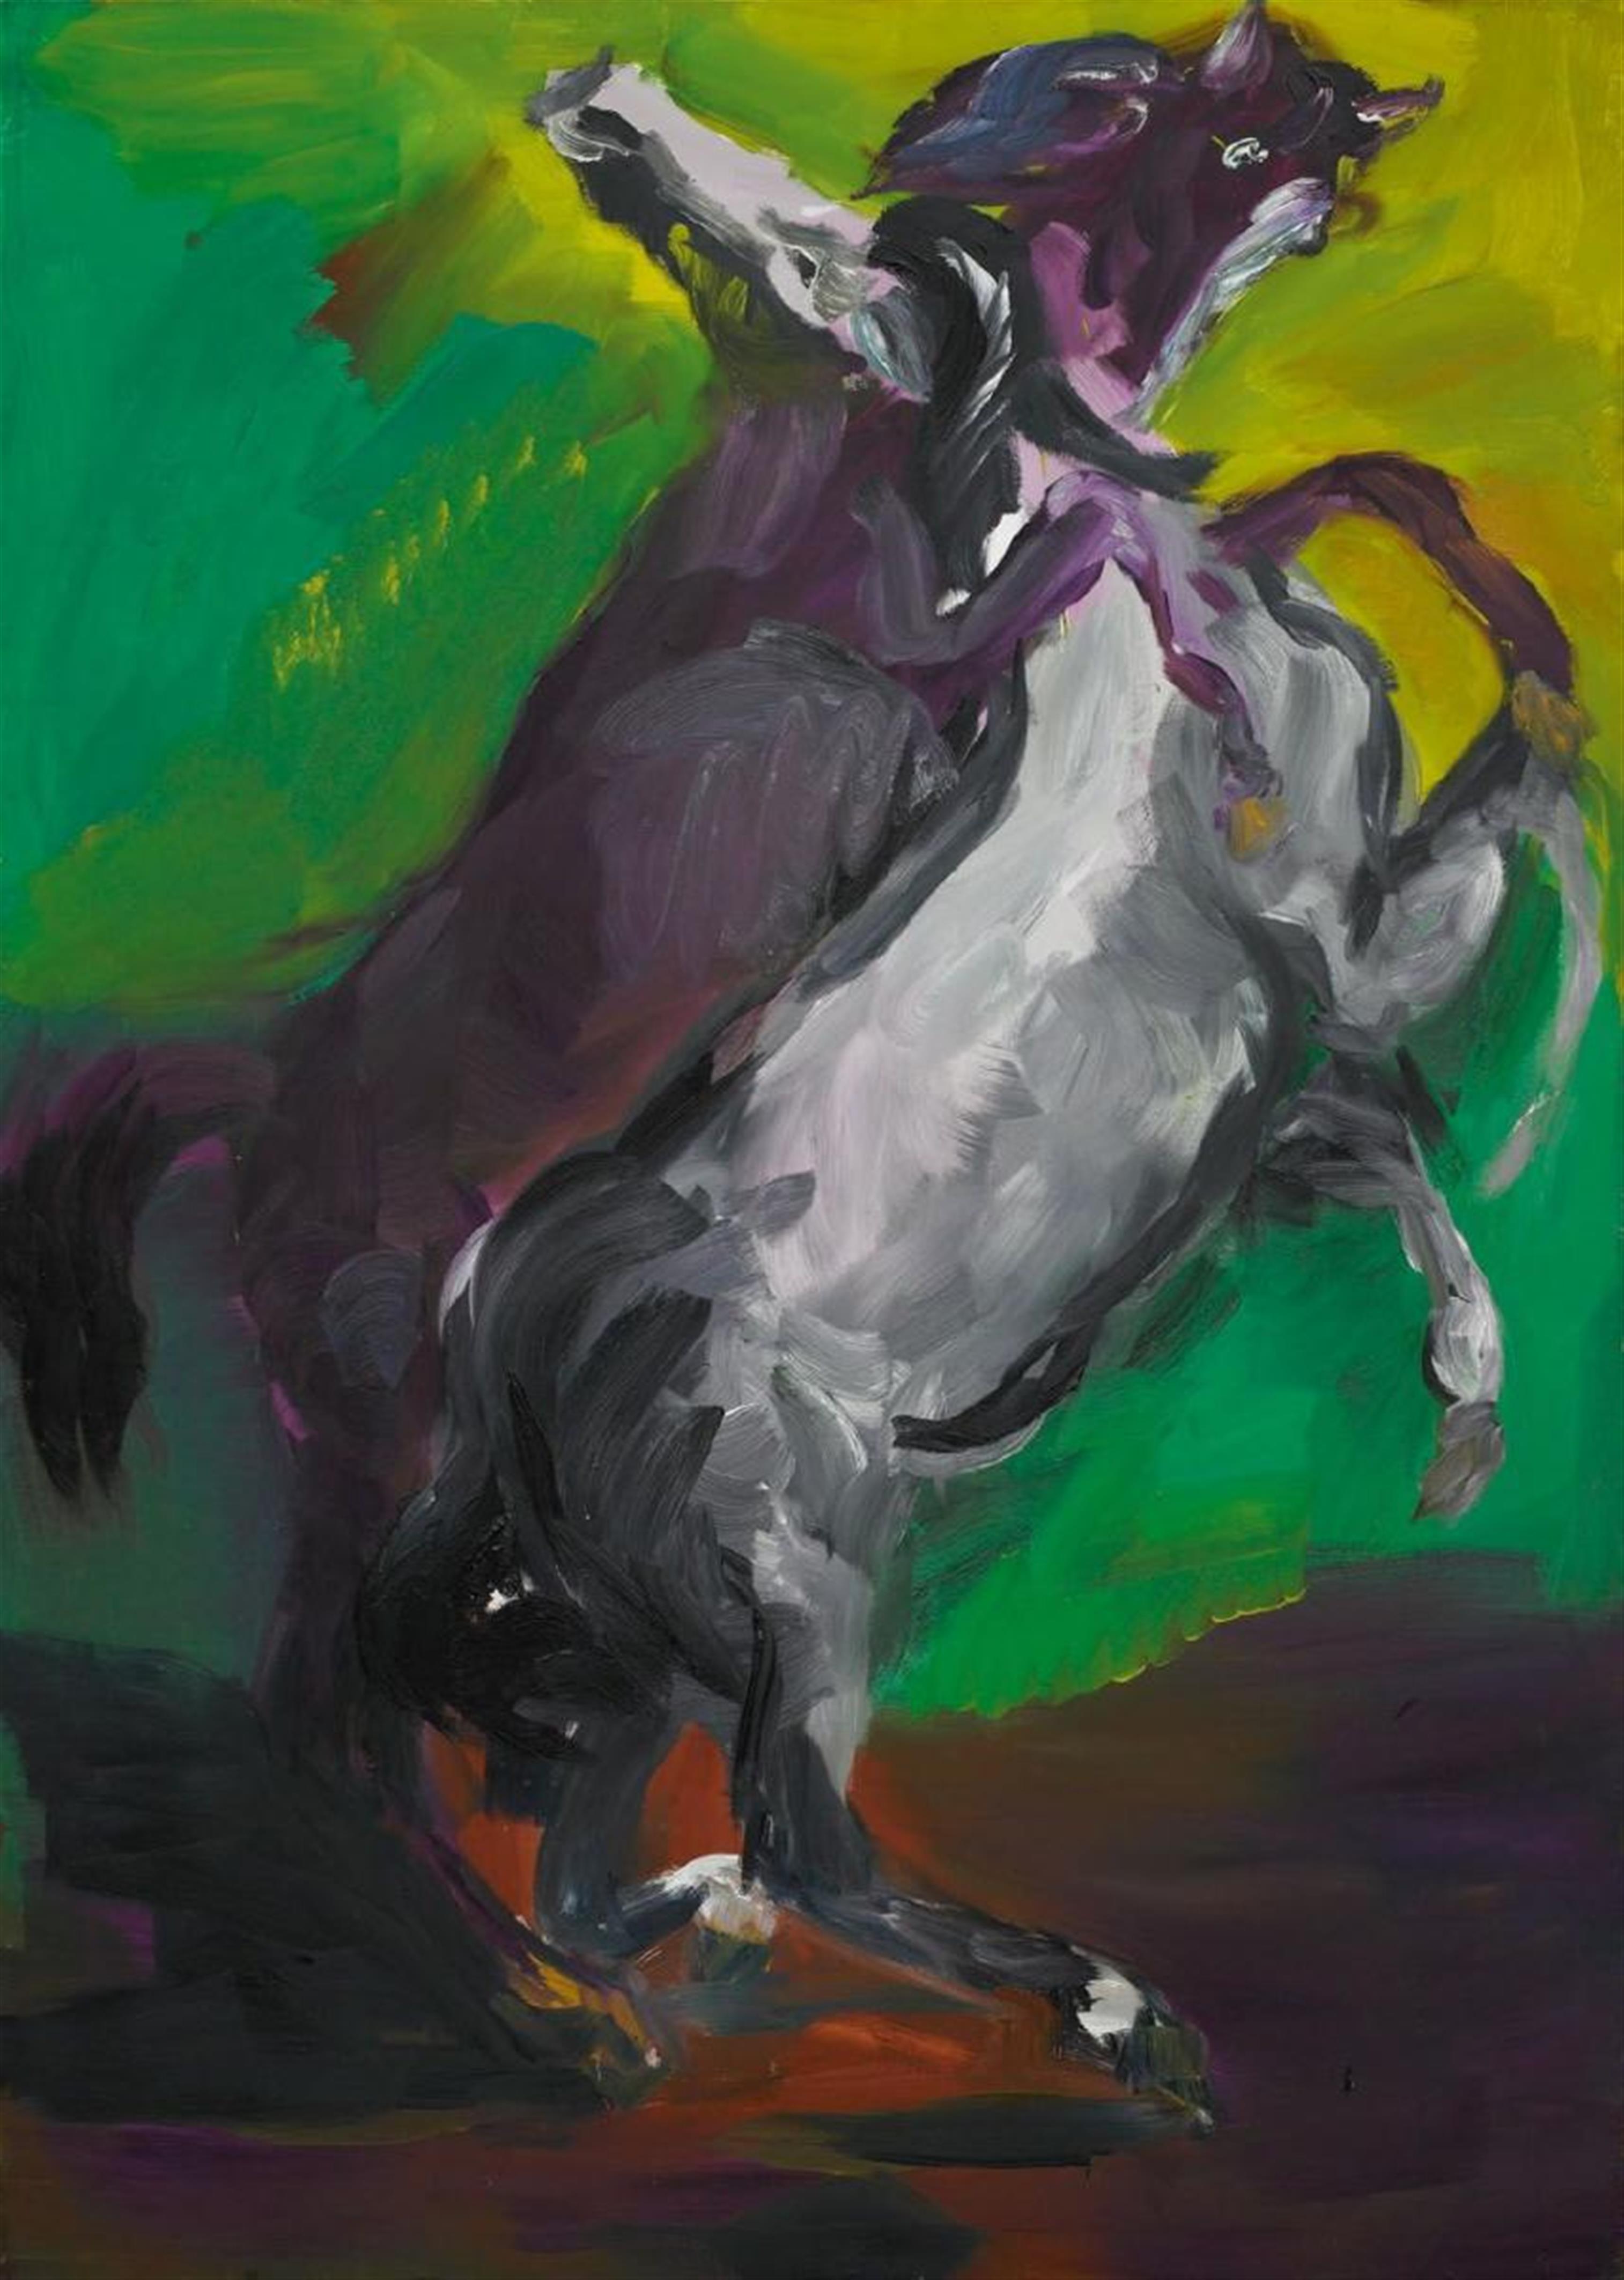 Rainer Fetting - 2 horses (Delacroix) - image-1